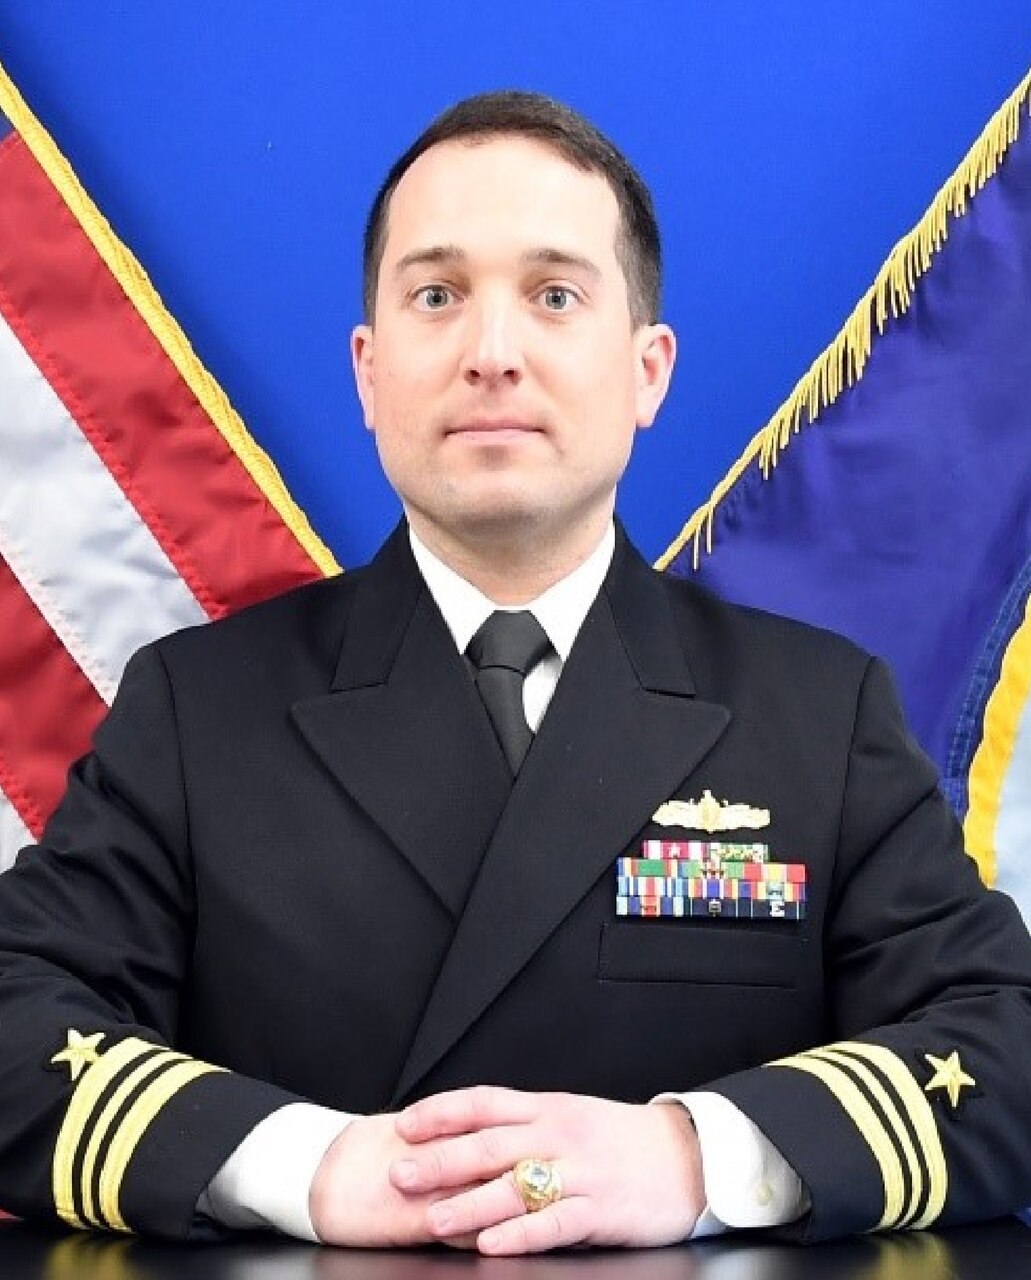 Lieutenant Commander Sean Hurley